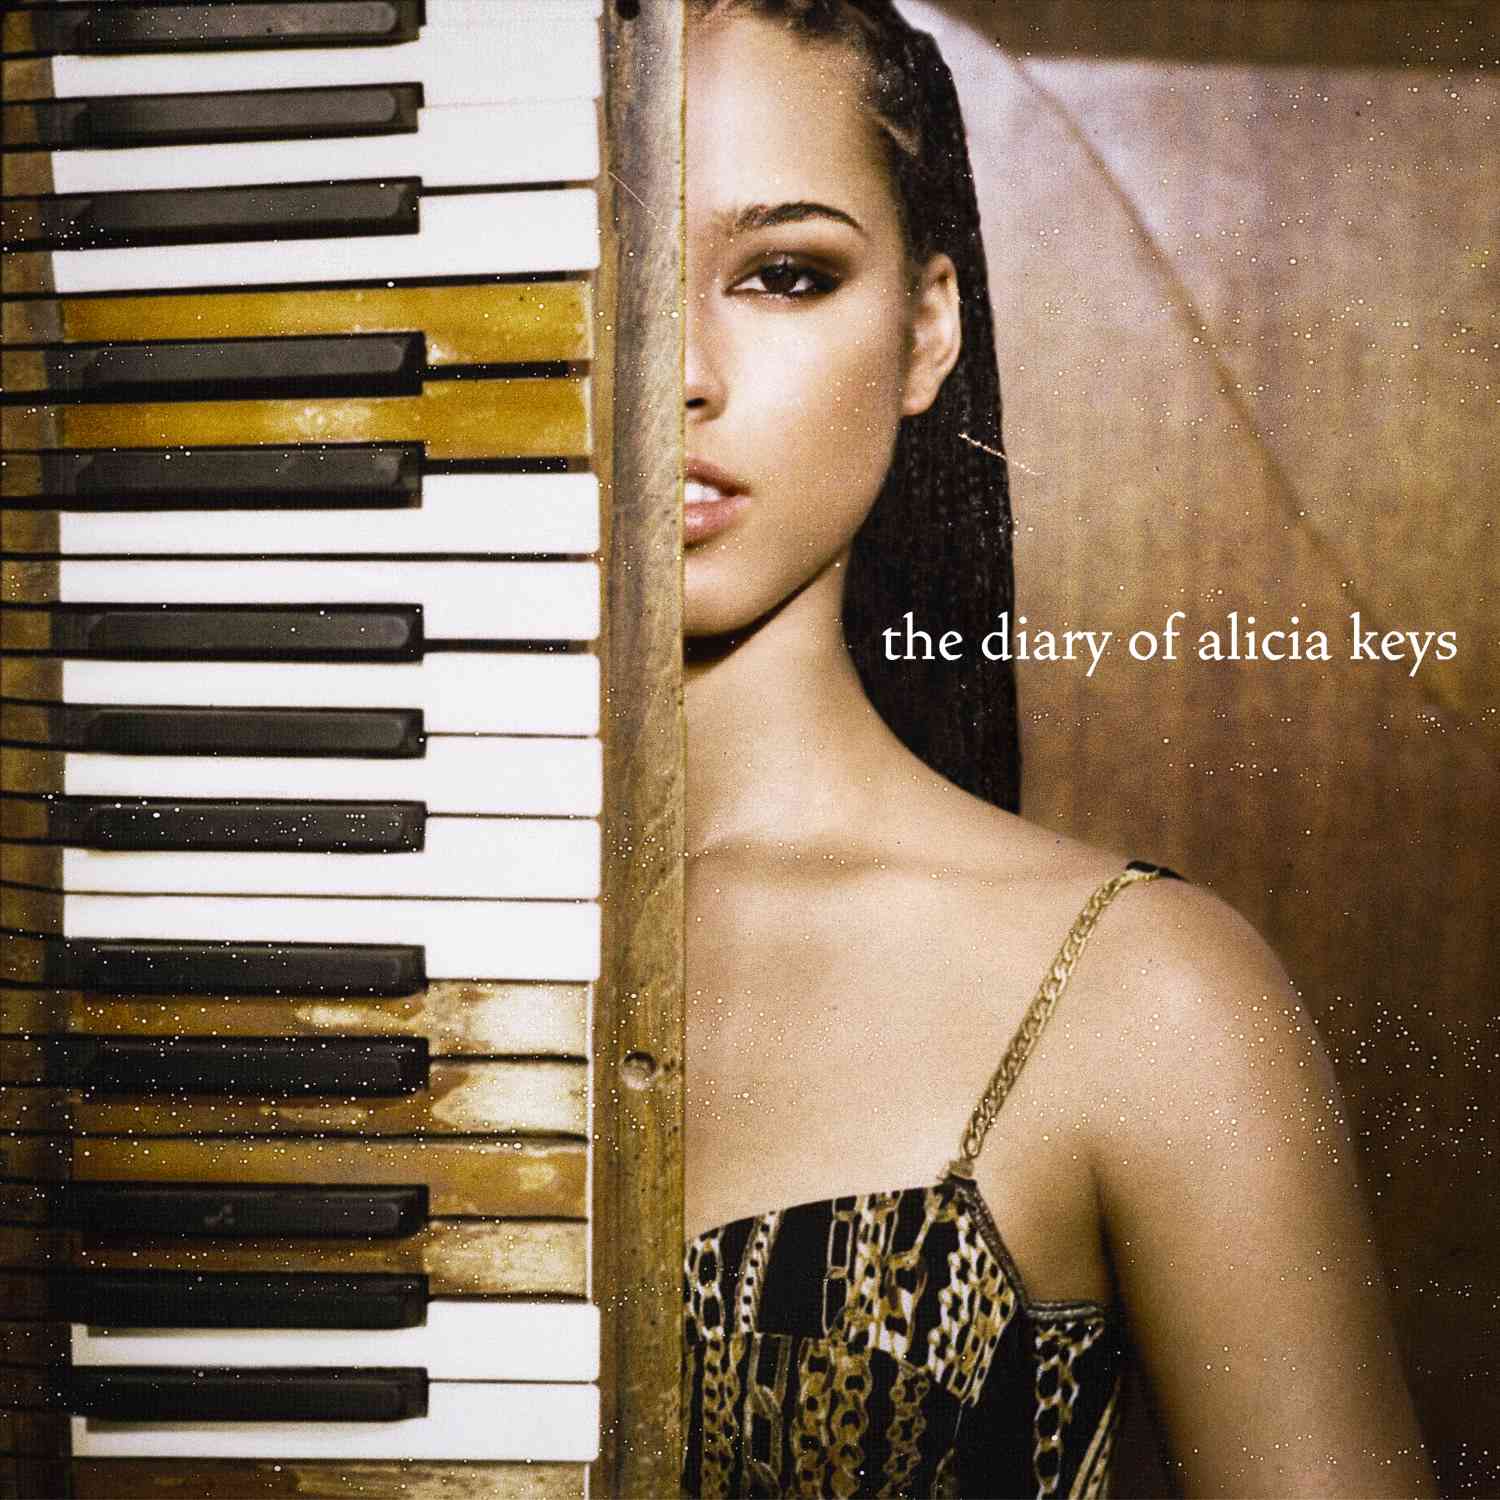 Alicia Keys new album cover "The Diary of Alice Keys" by Warwick Saint